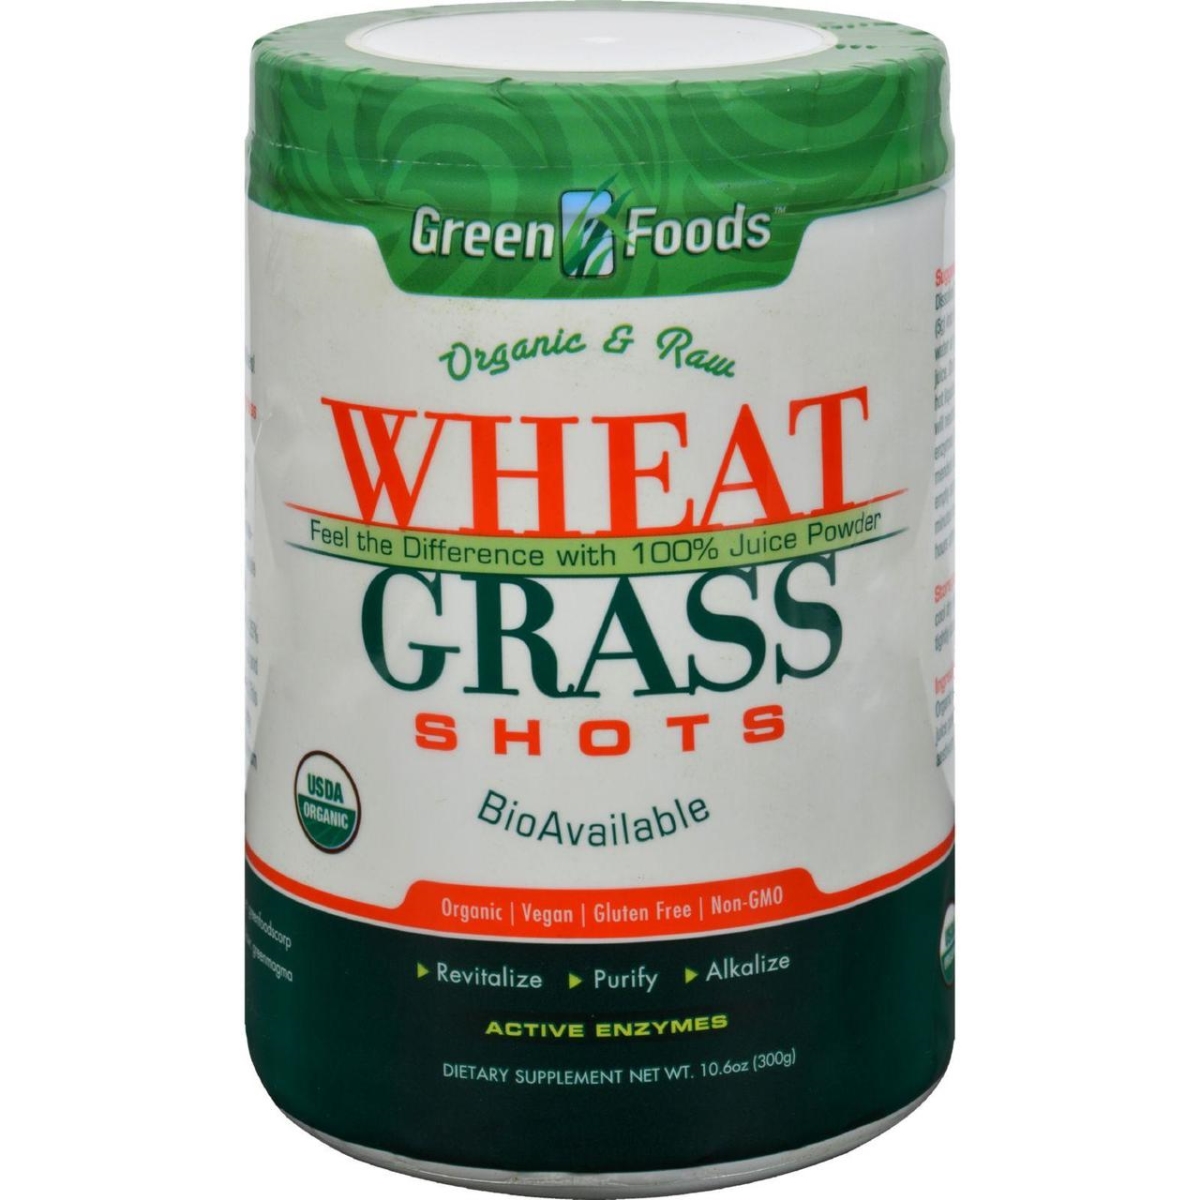 Hg1090117 10.6 Oz Organic & Raw Wheat Grass Shots